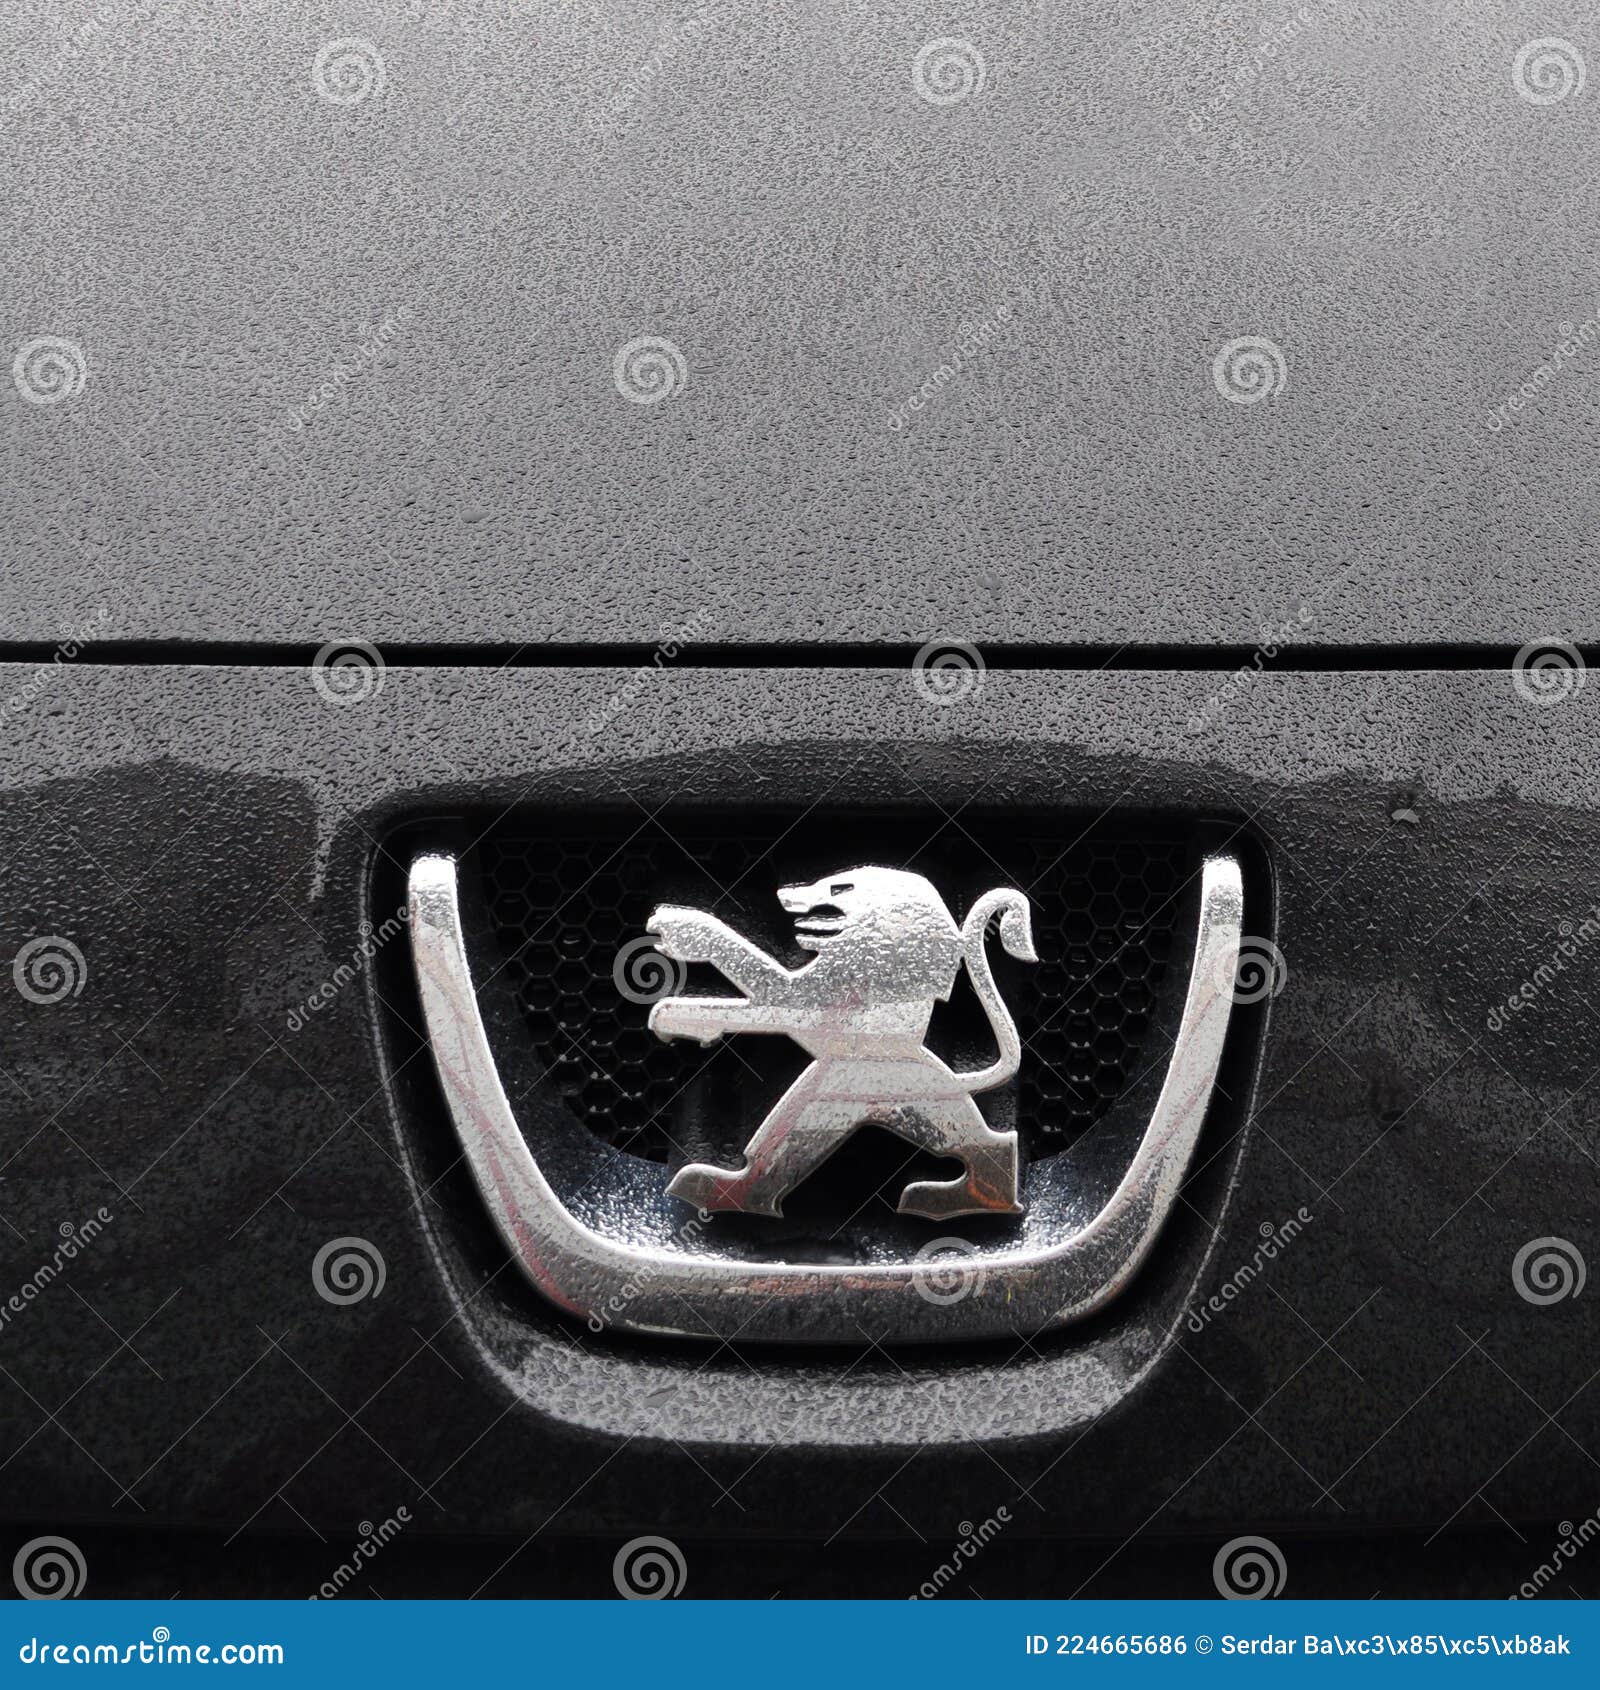 Peugeot Logo, Luxury Car in Istanbul City, December 29 2010 Istanbul Pendik  Turkey Used Car Market Editorial Photo - Image of auto, metallic: 224665686